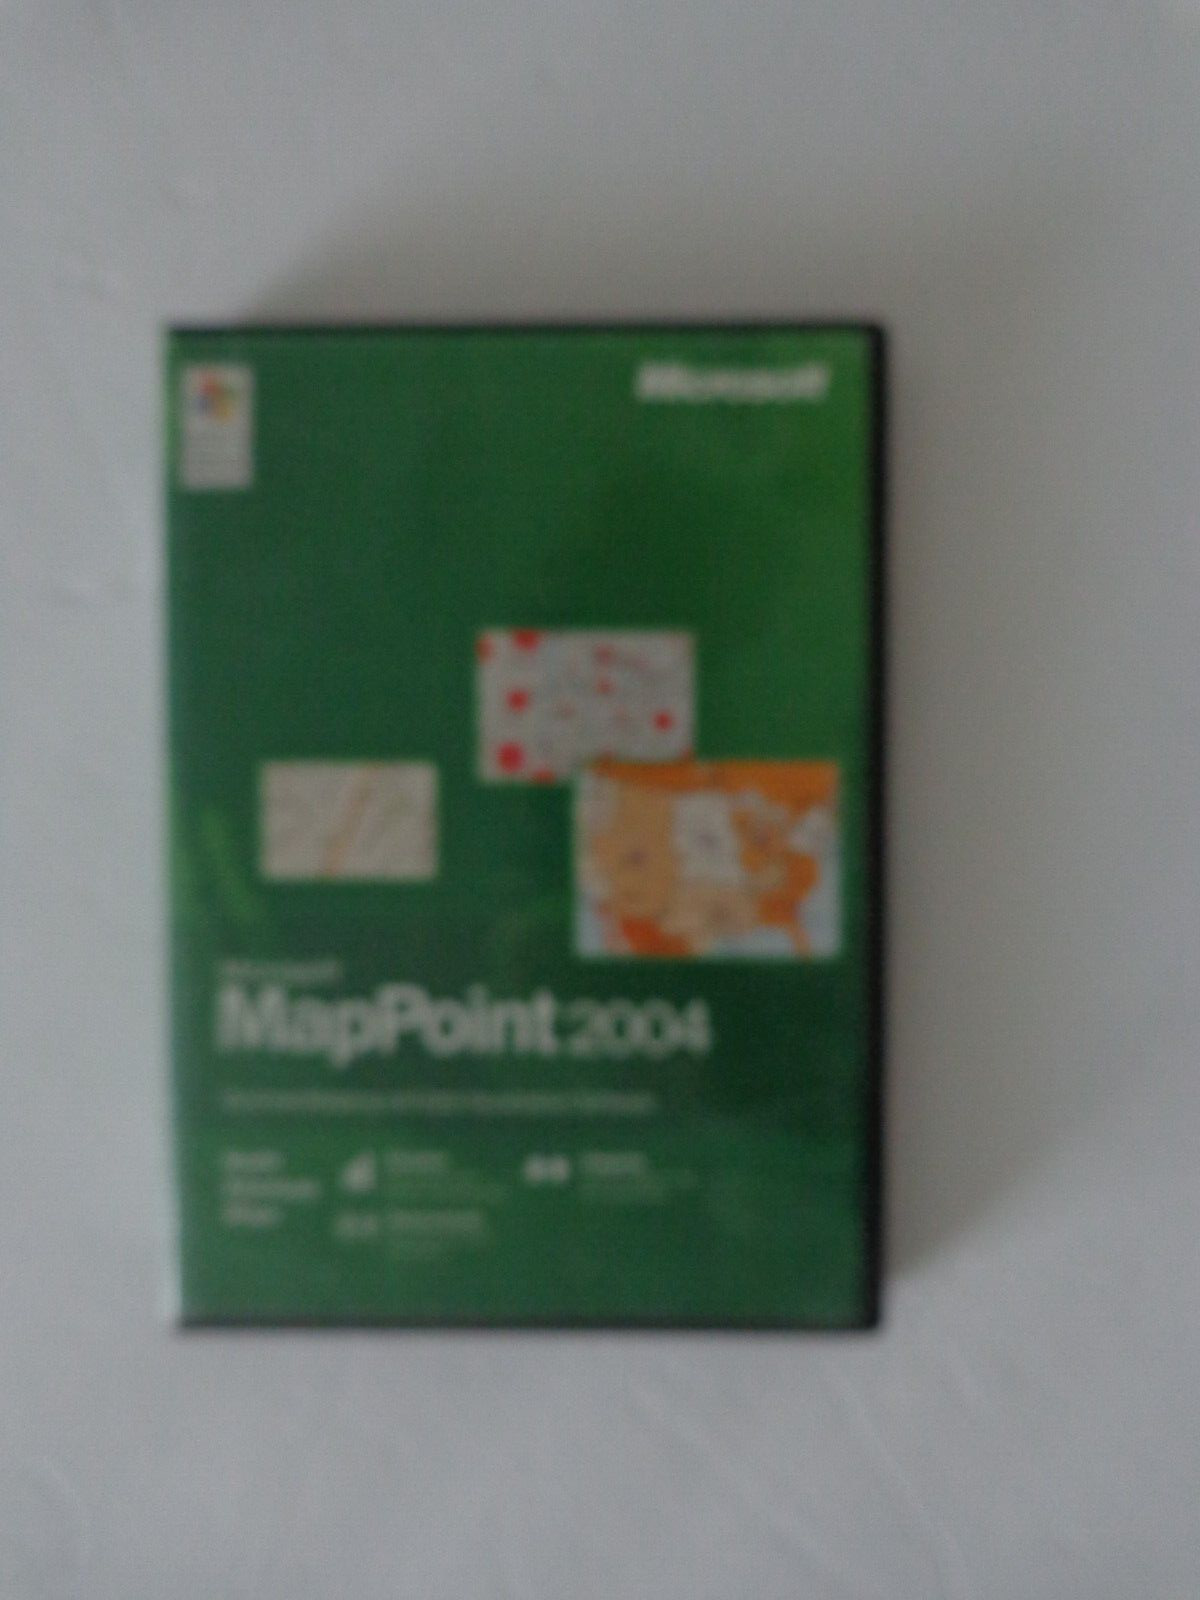 Microsoft MapPoint 2004 - North America Maps 